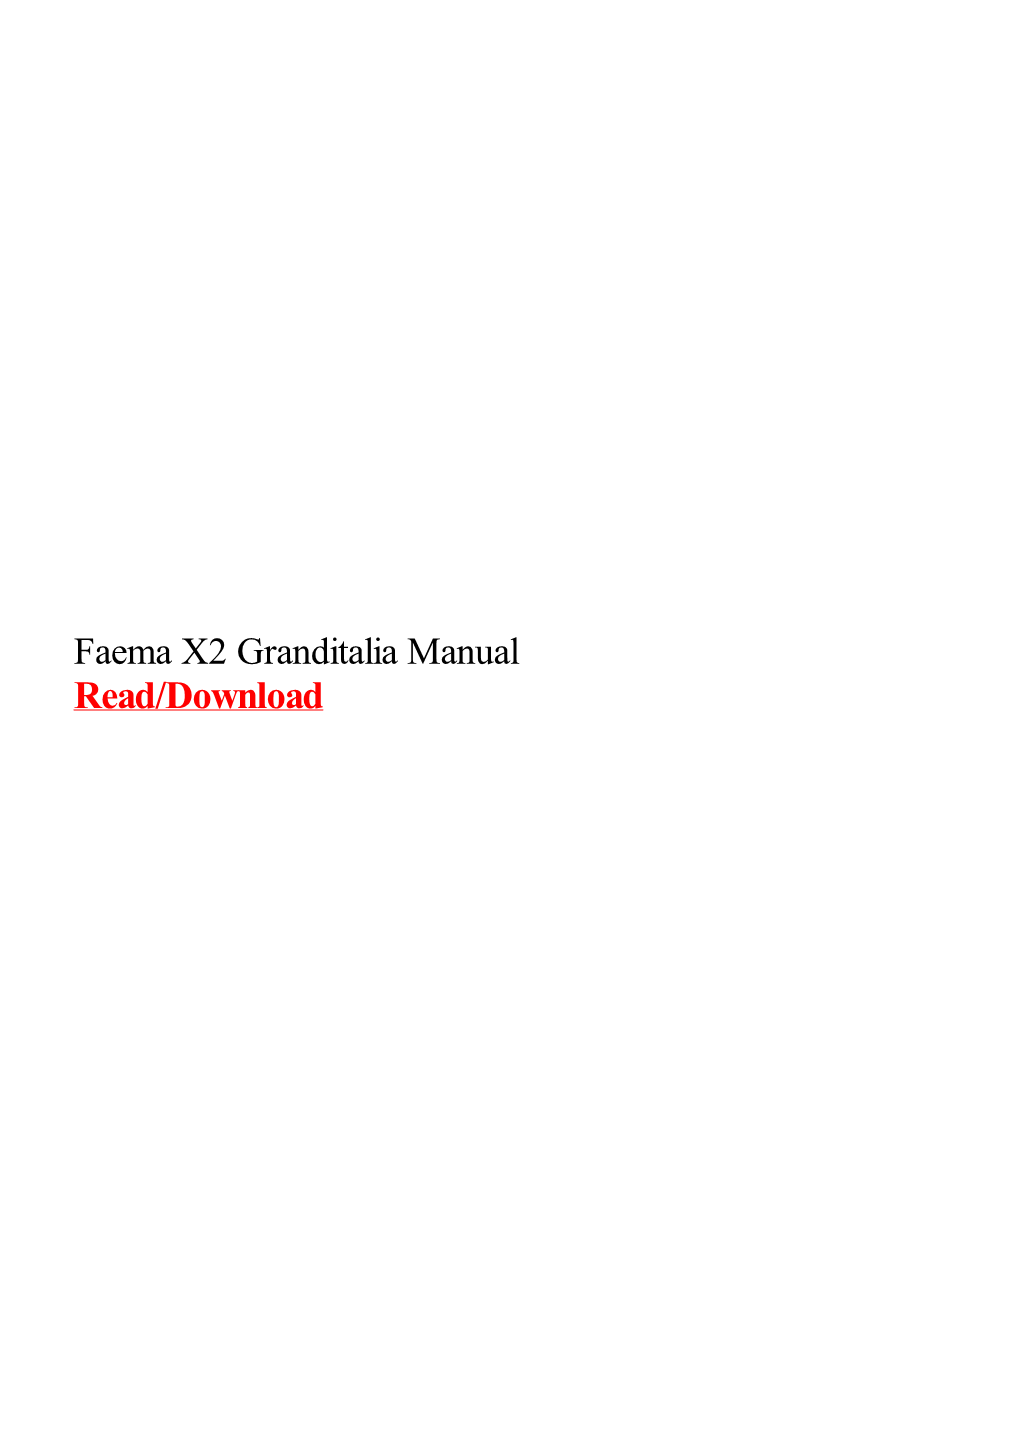 Faema X2 Granditalia Manual